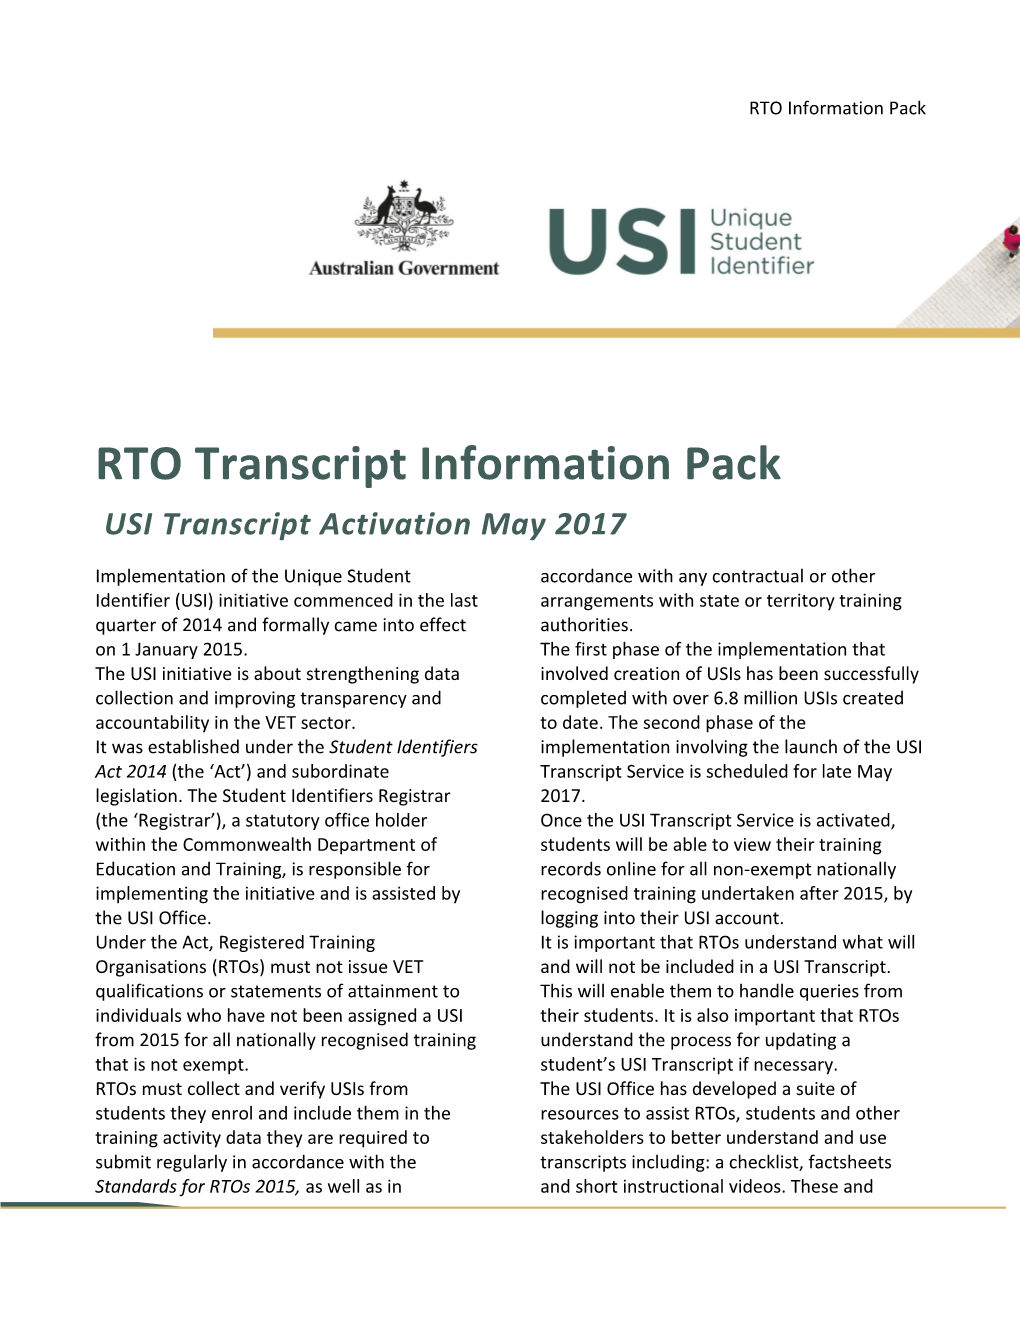 RTO Transcript Information Pack